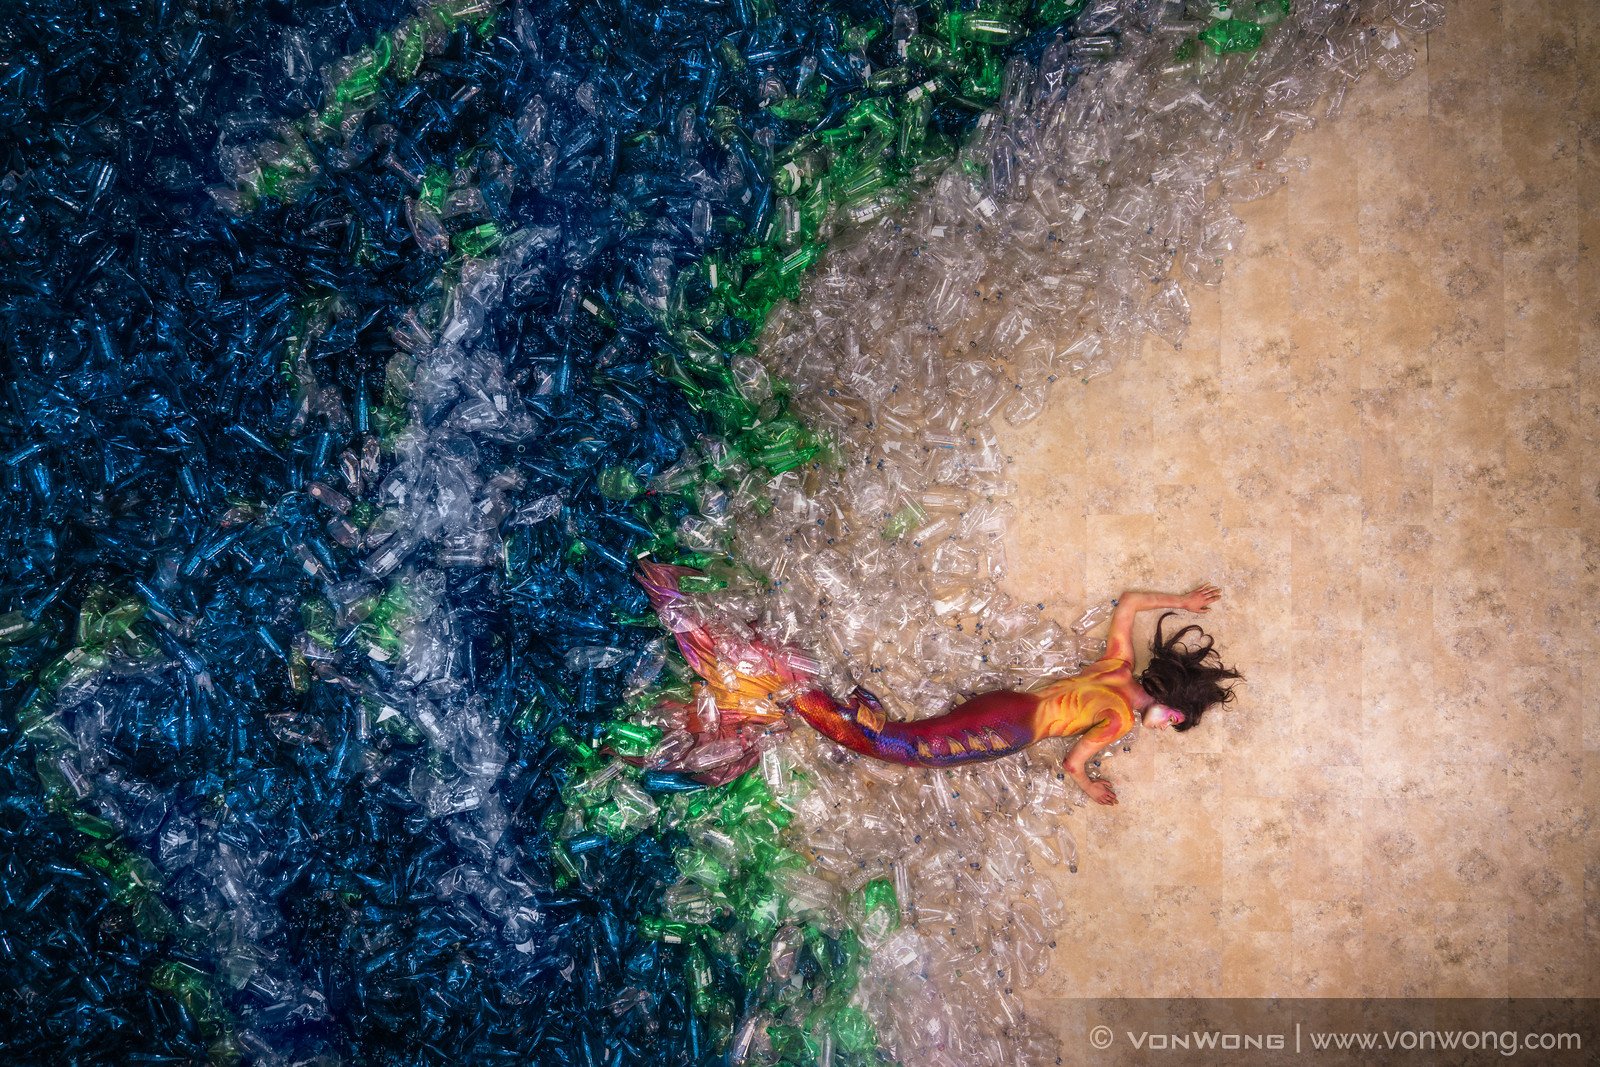  photographer puts mermaid 000 plastic bottles raise awareness 